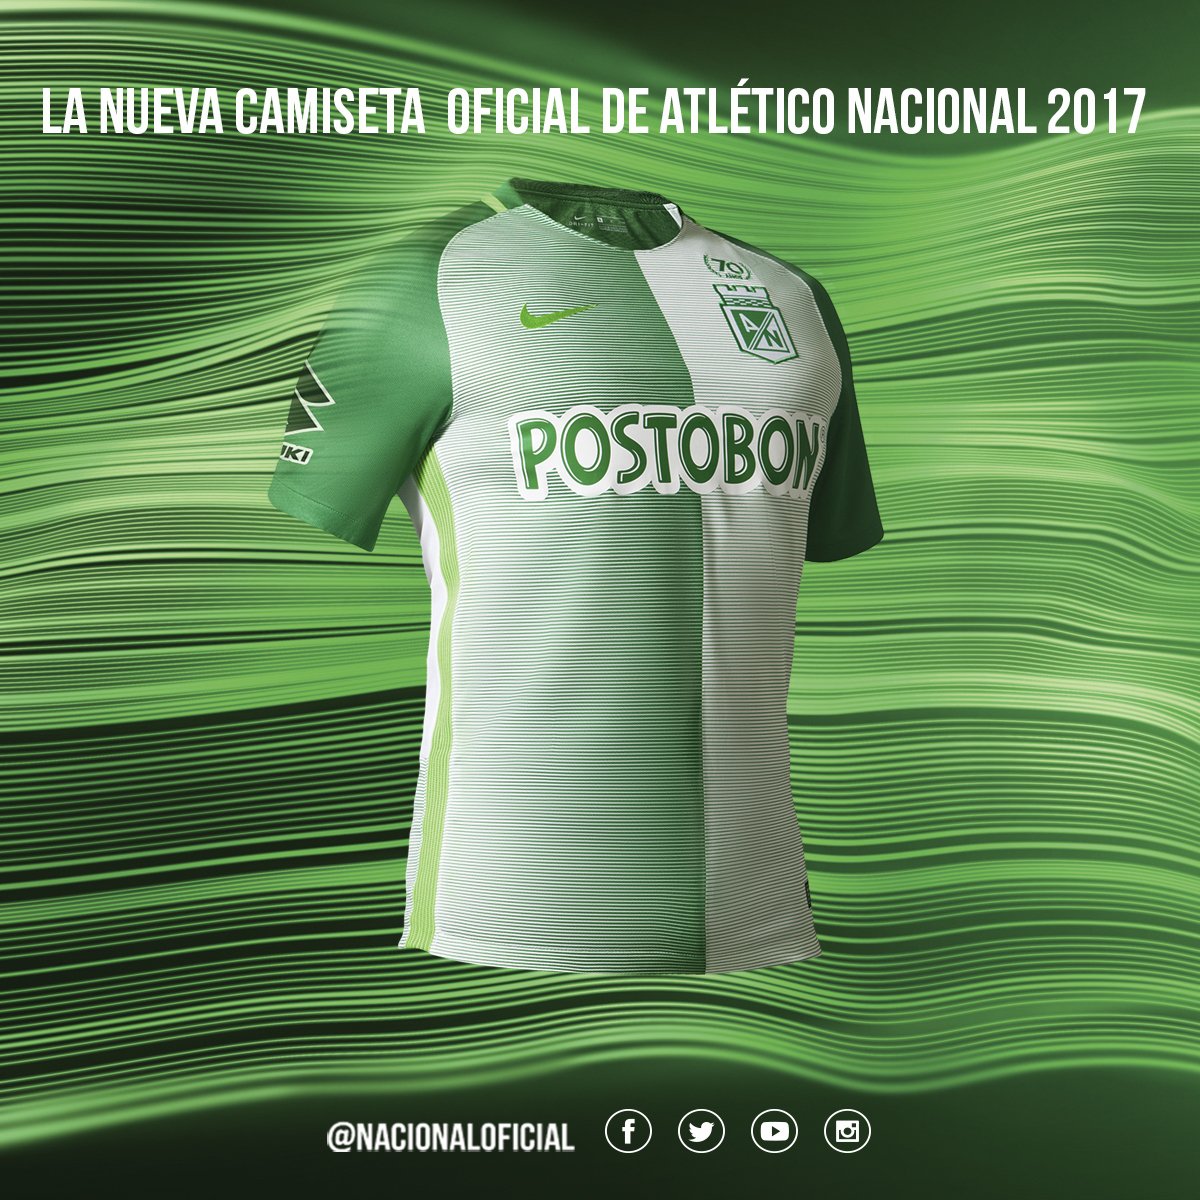 Nacional Mi Pasión on Twitter: "Nueva camiseta Atlético Nacional-. ¿Te https://t.co/F0Vf6sMke2" / Twitter